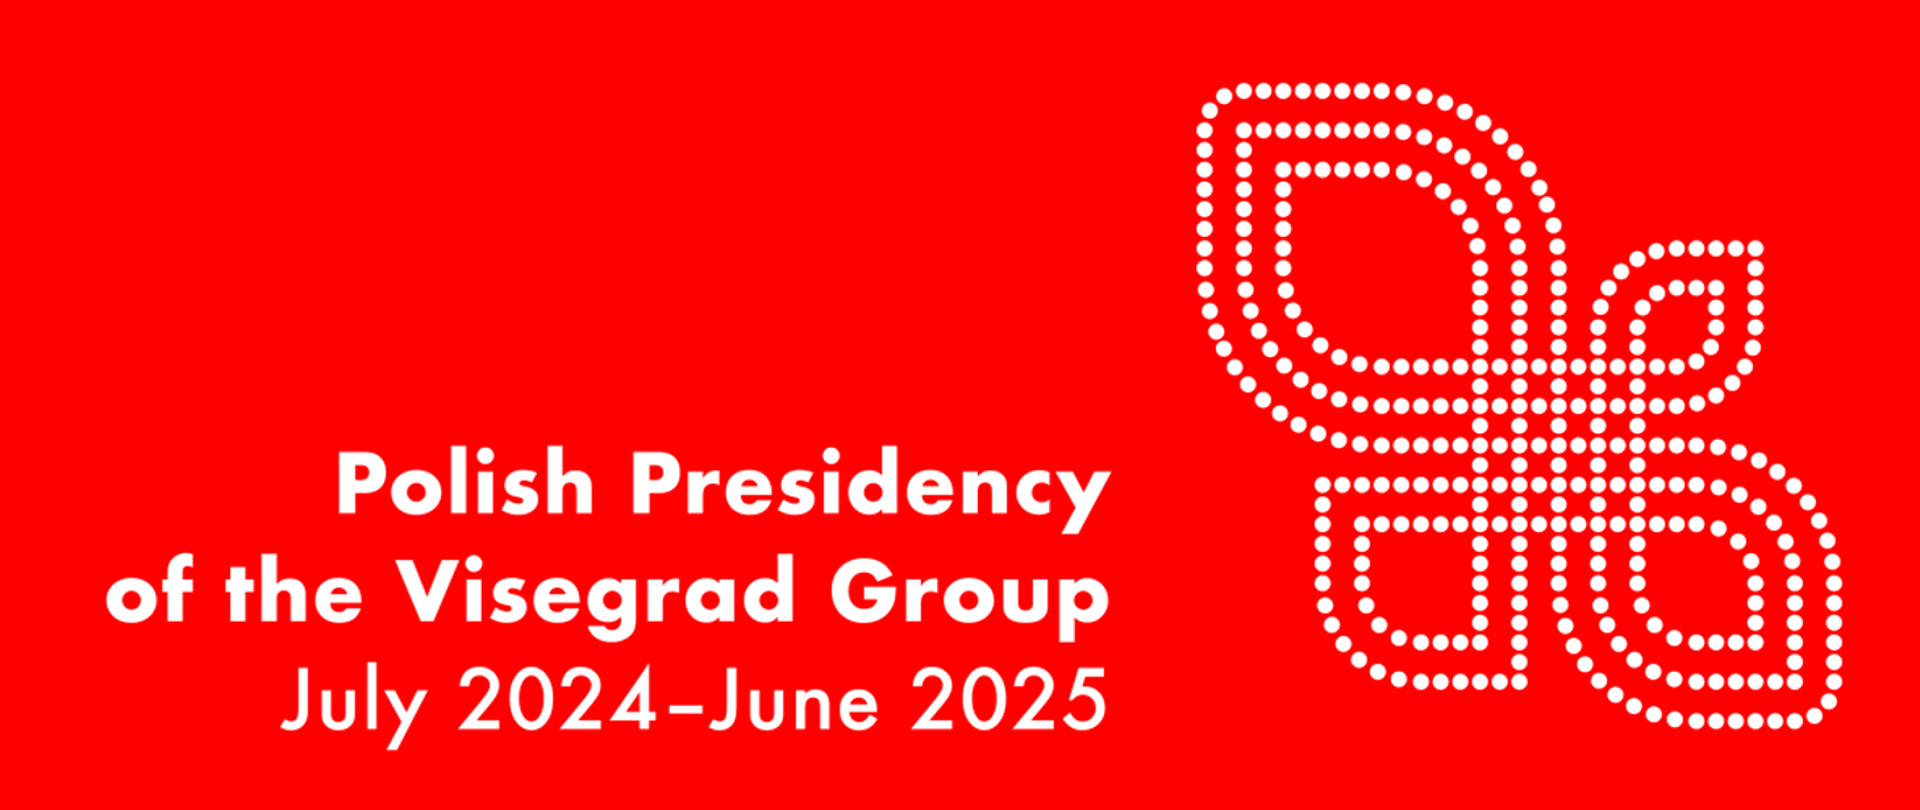 Poland takes over Visegrad Group presidency